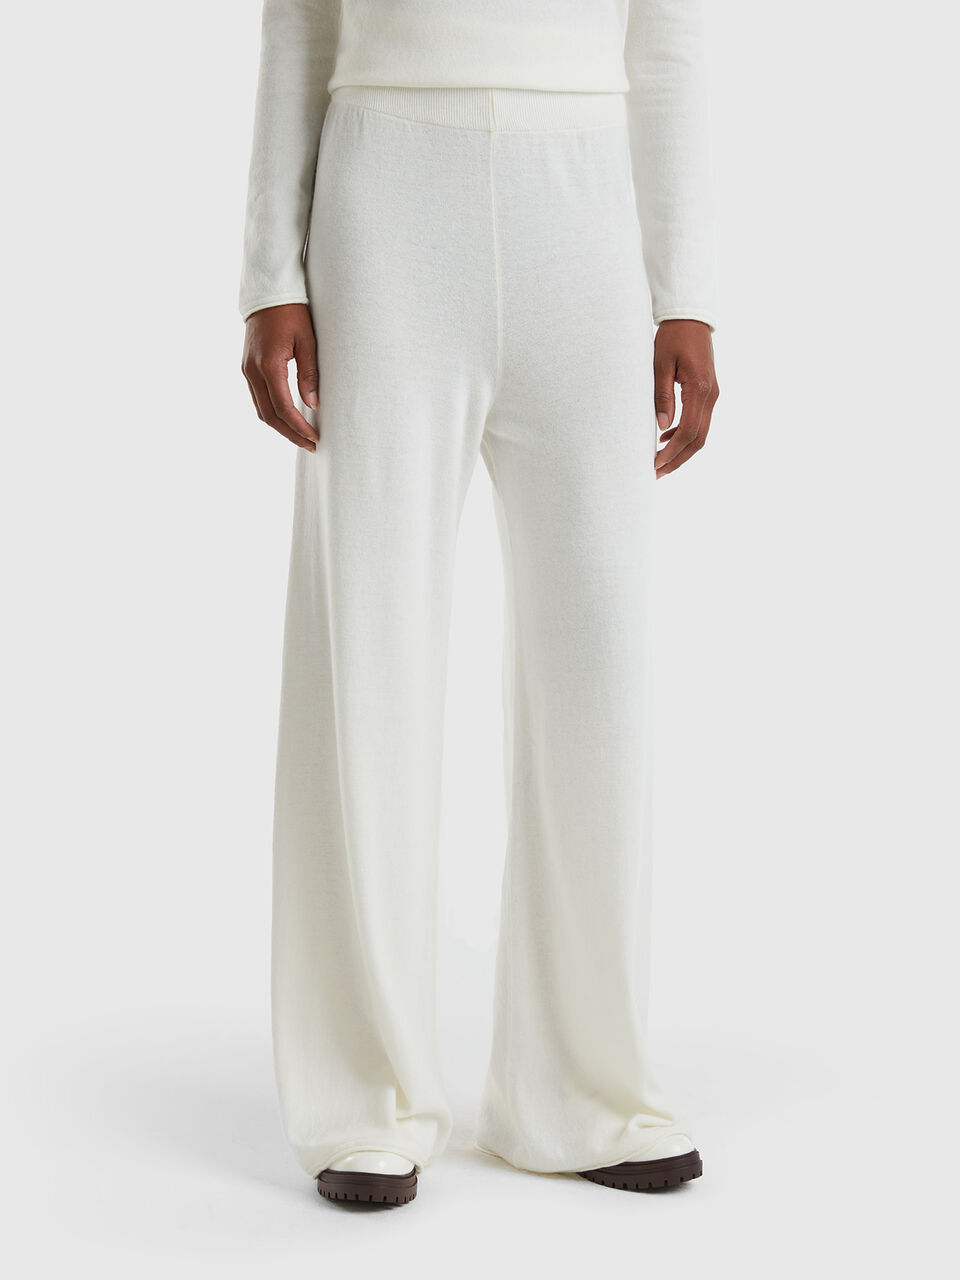 Pantaloni ampi bianco panna in misto lana e cashmere